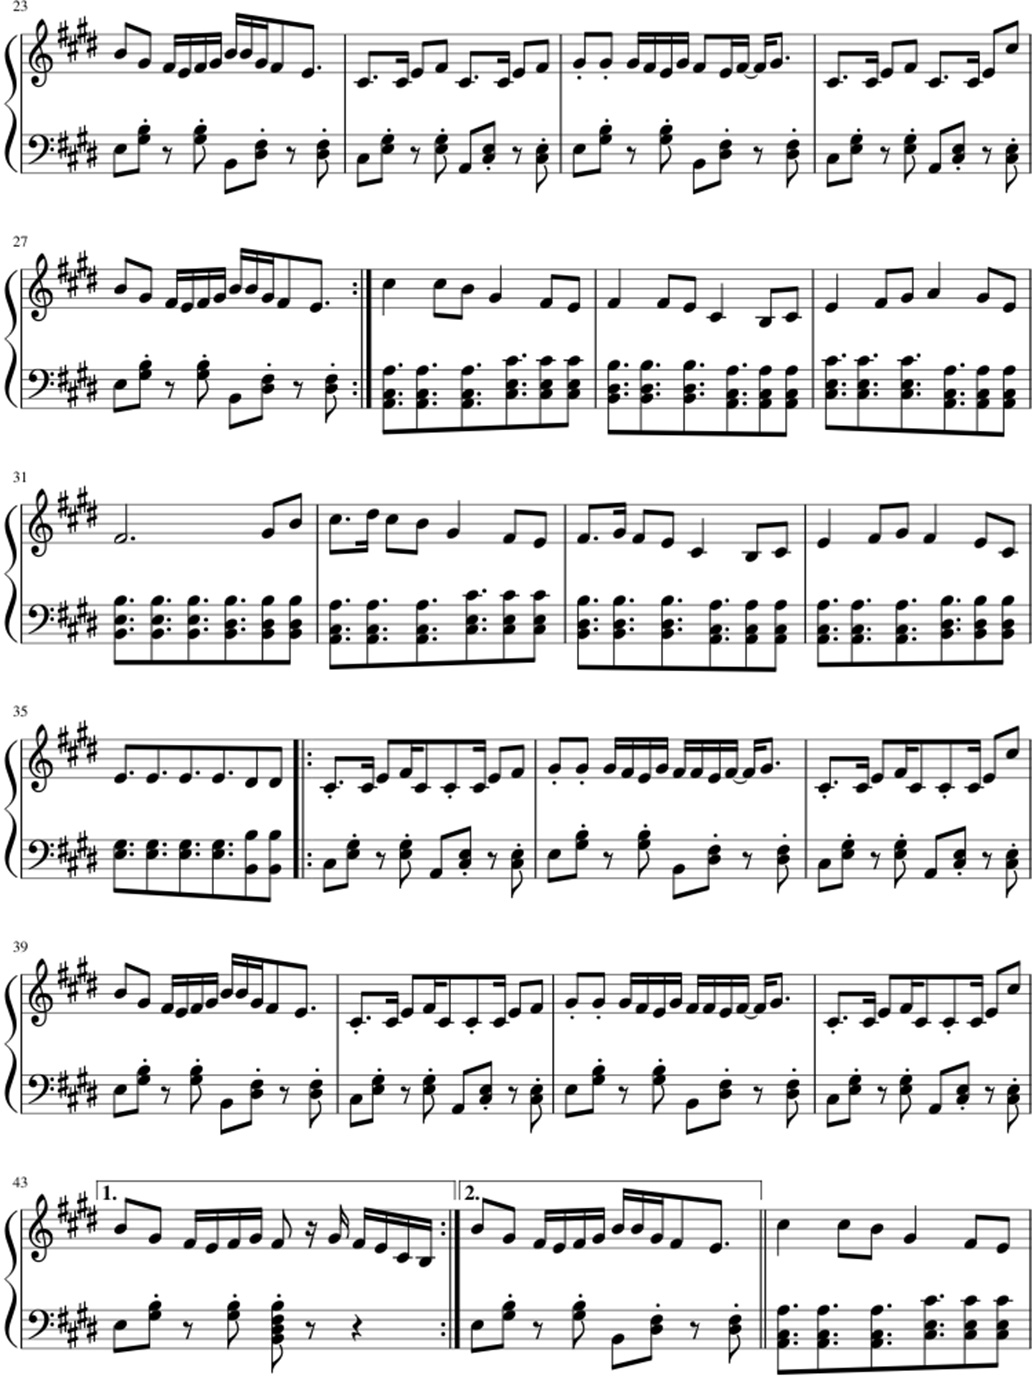 Monody sheet music notes 2